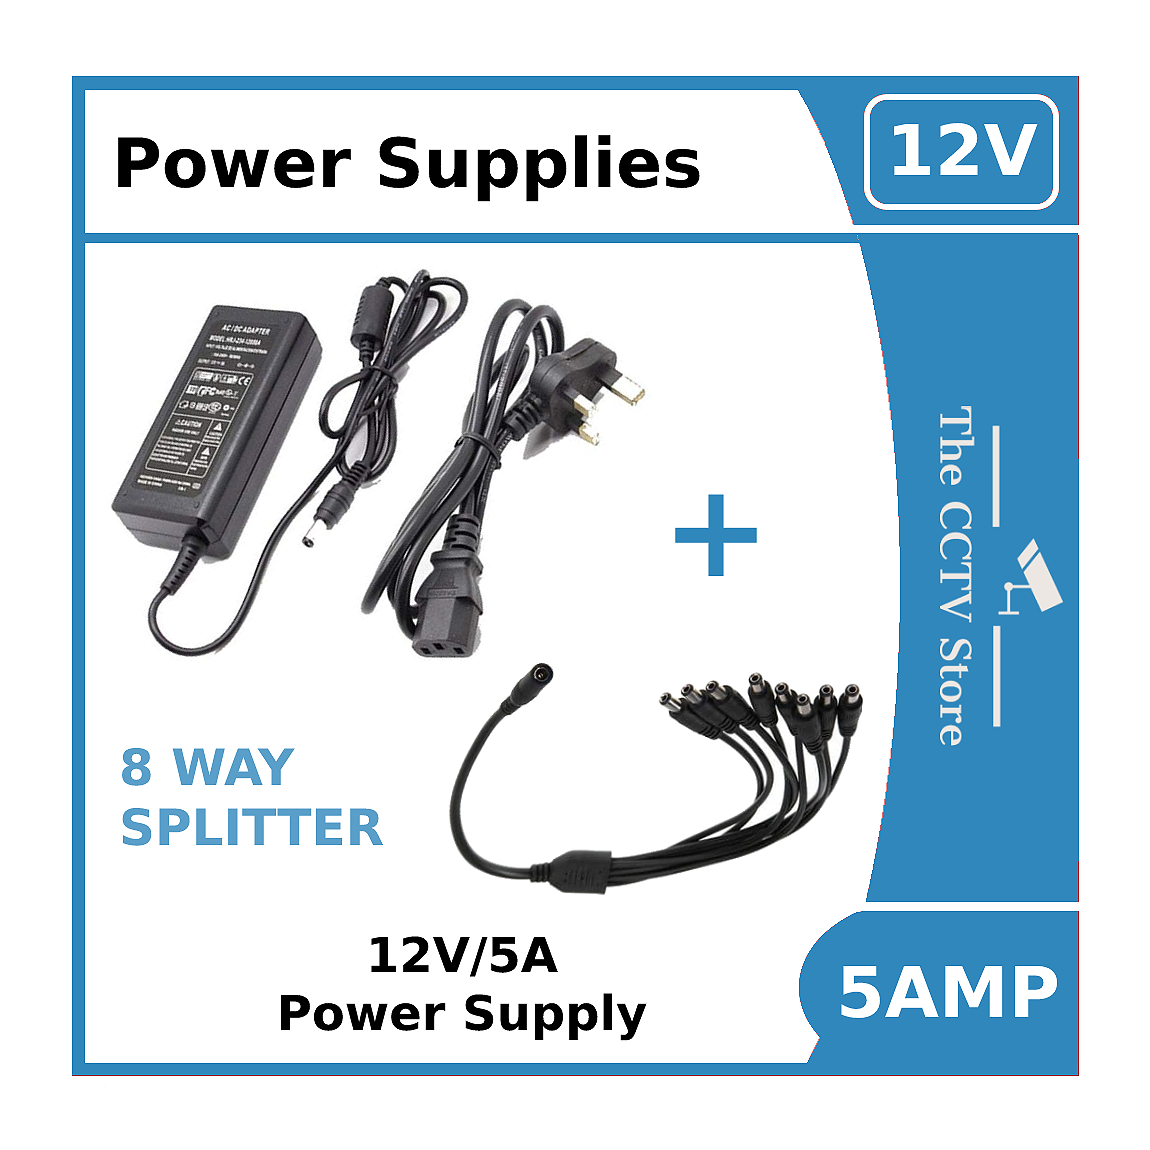 Power Supply 12V/5A for CCTV Cameras -12vDC Power Supply 5amp